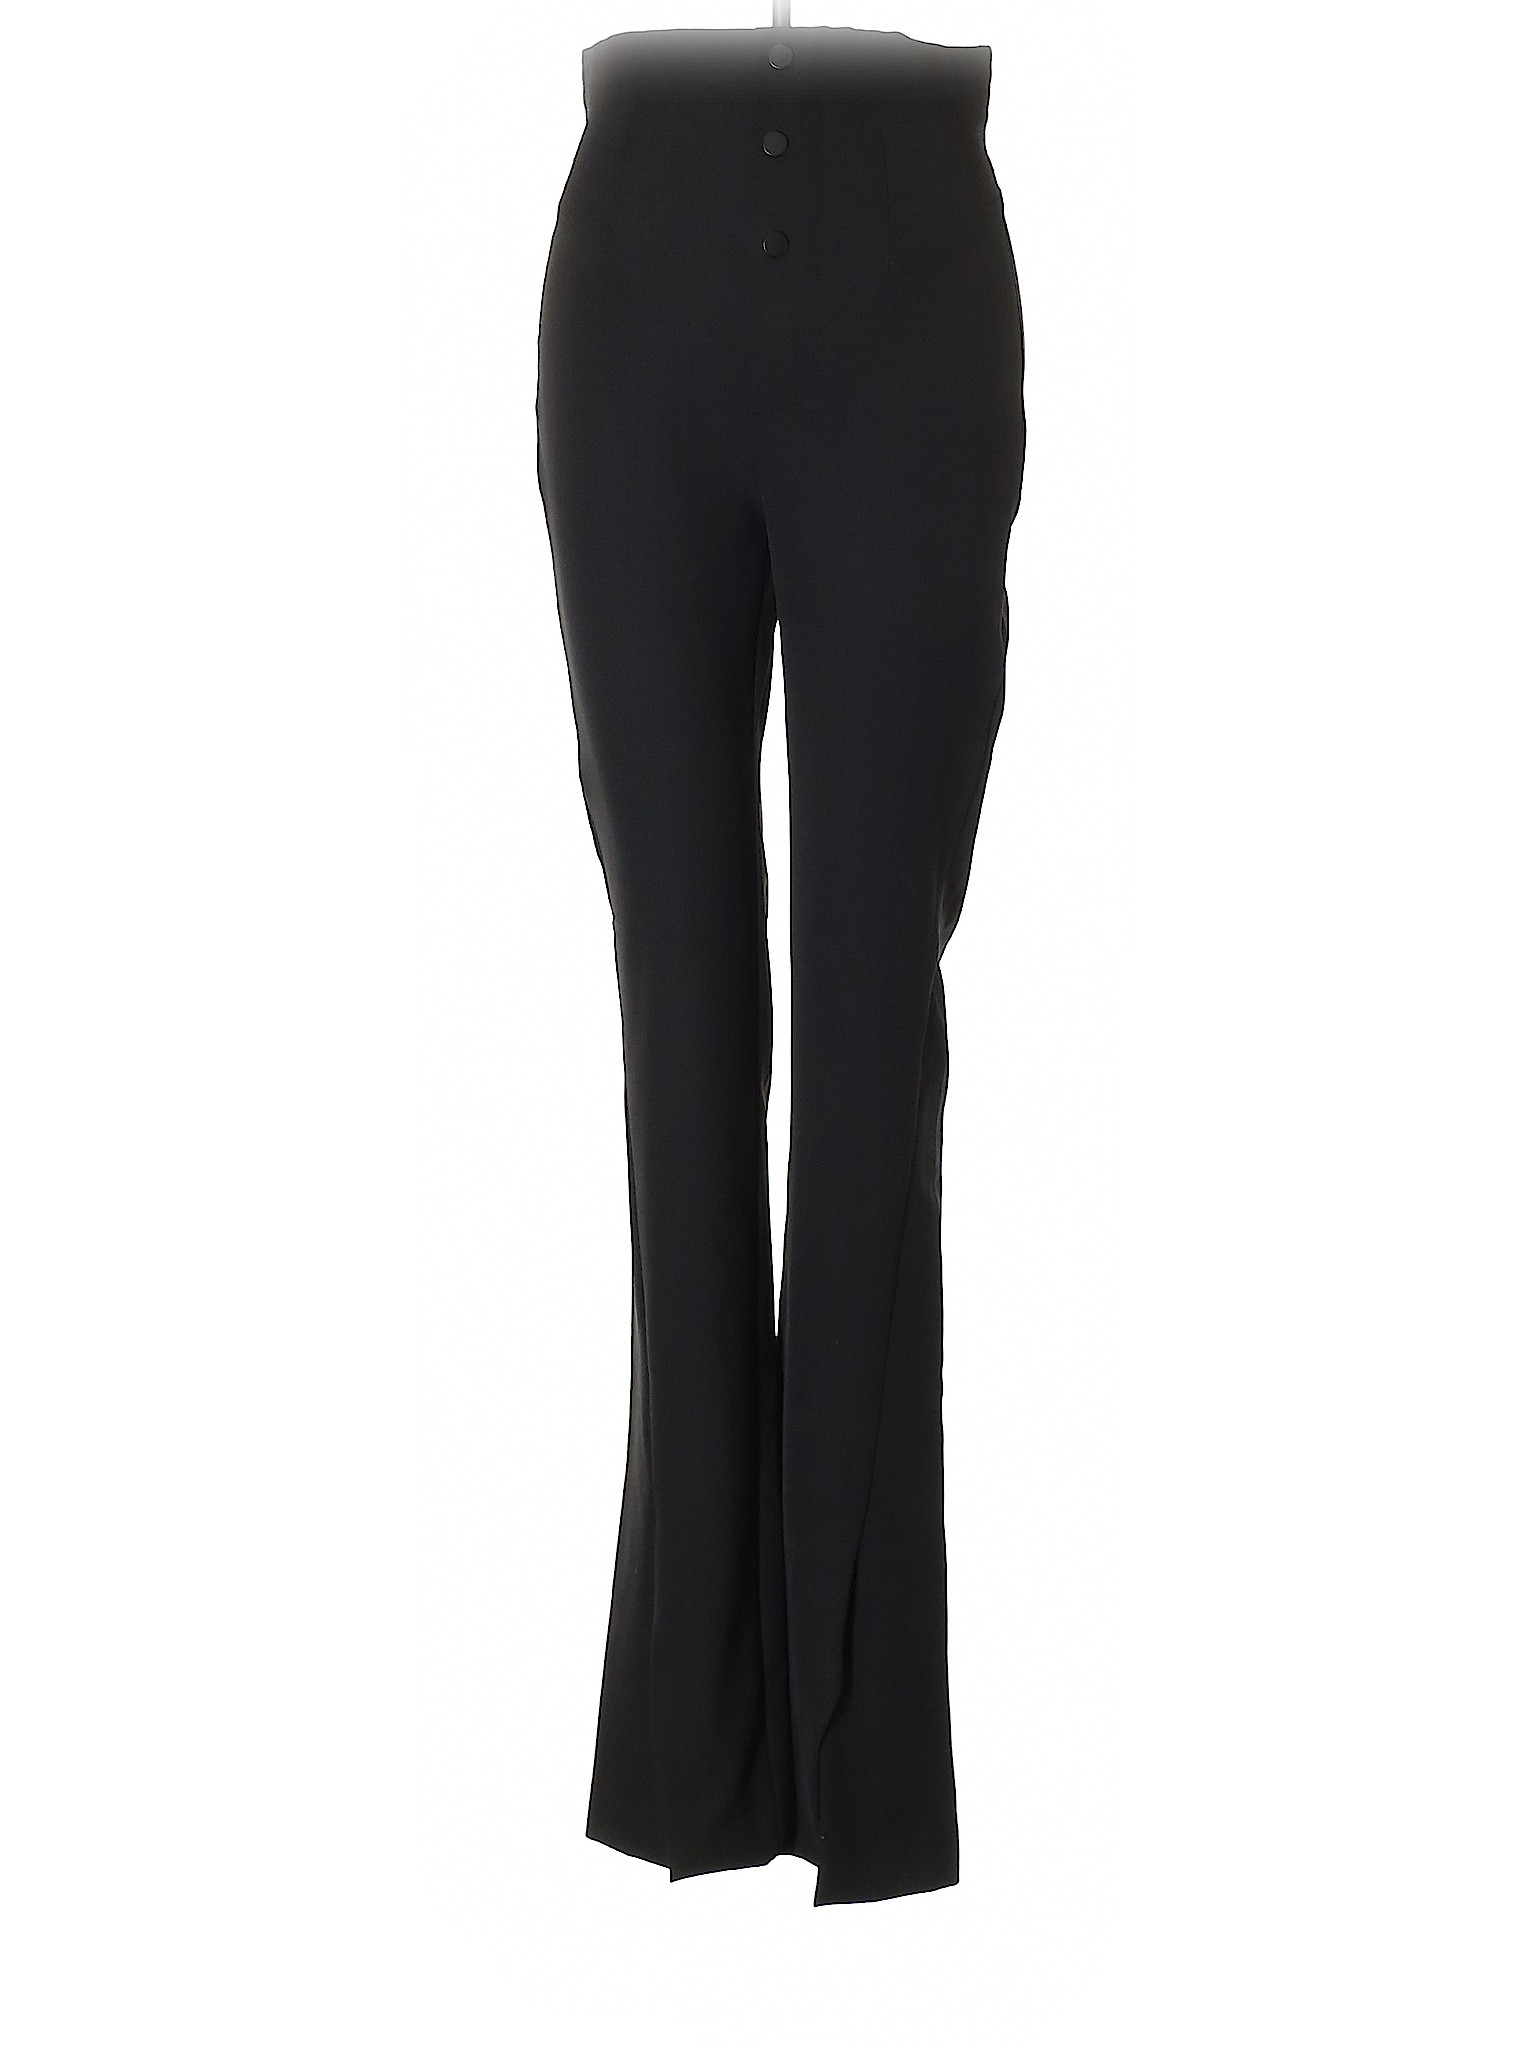 Zara Solid Black Dress Pants Size M - 60% off | thredUP